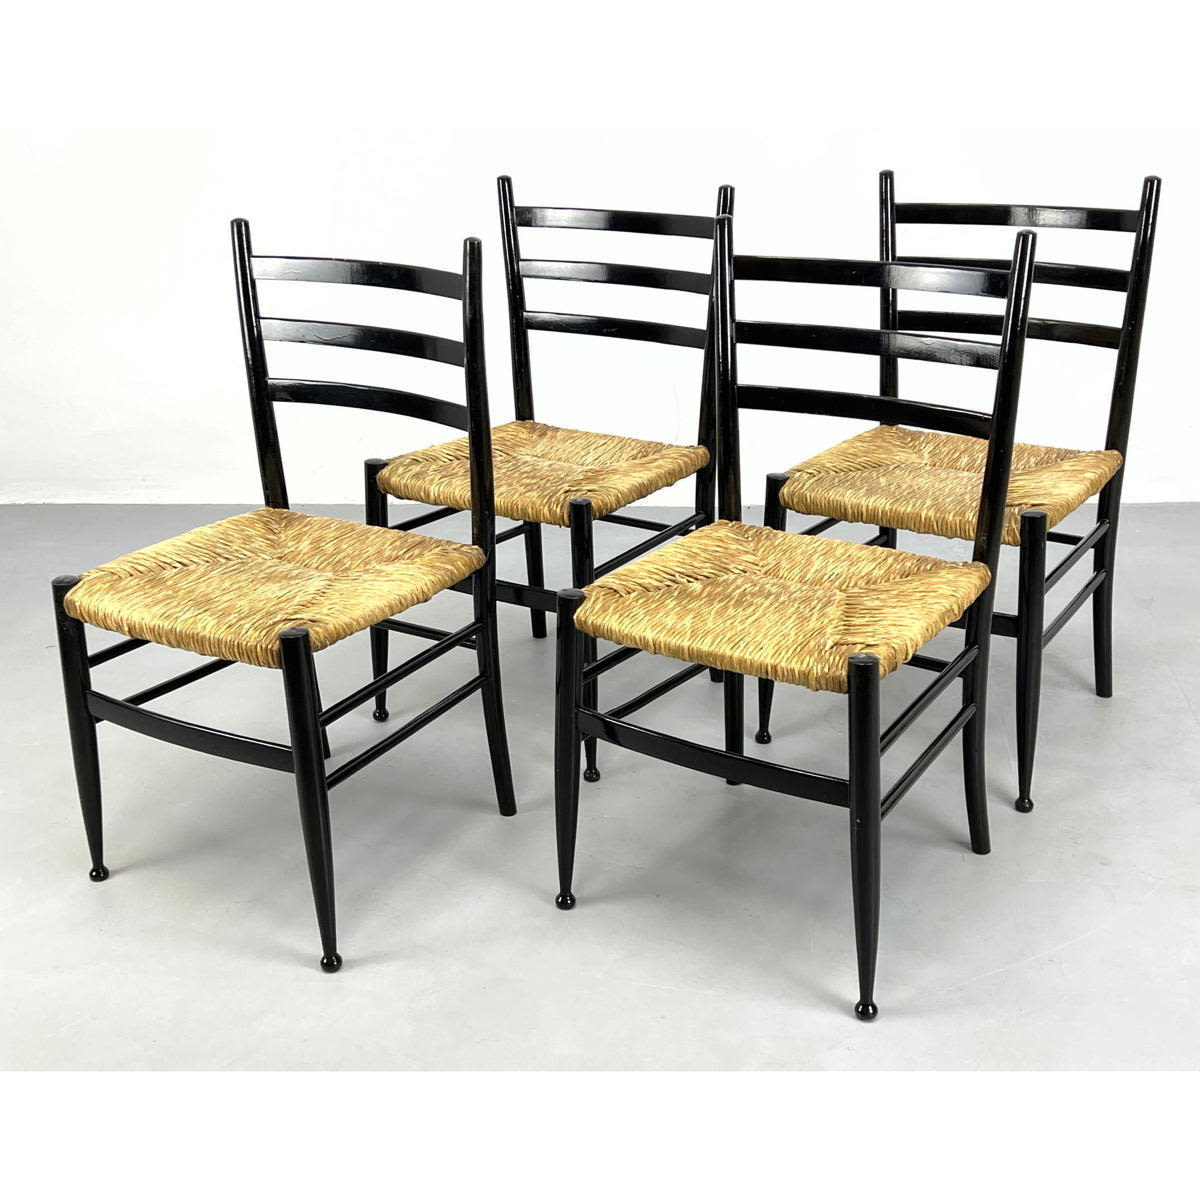 Set 4 Gio Ponti Style Dining chairs.